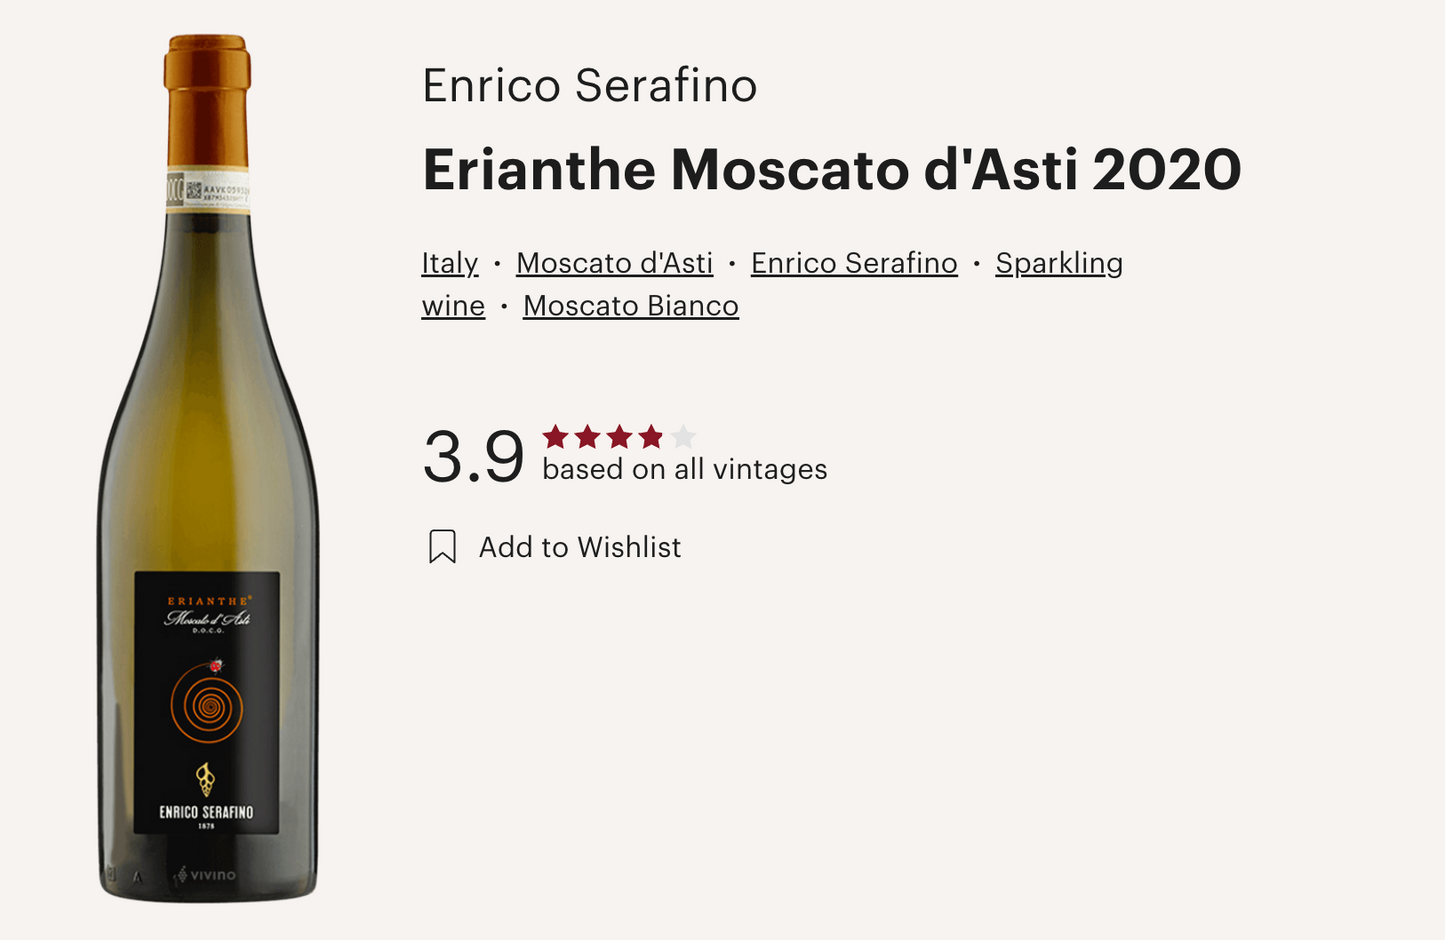 意大利 Enrico Serafino Moscato d'Asti Erianthe 2020 氣泡白酒